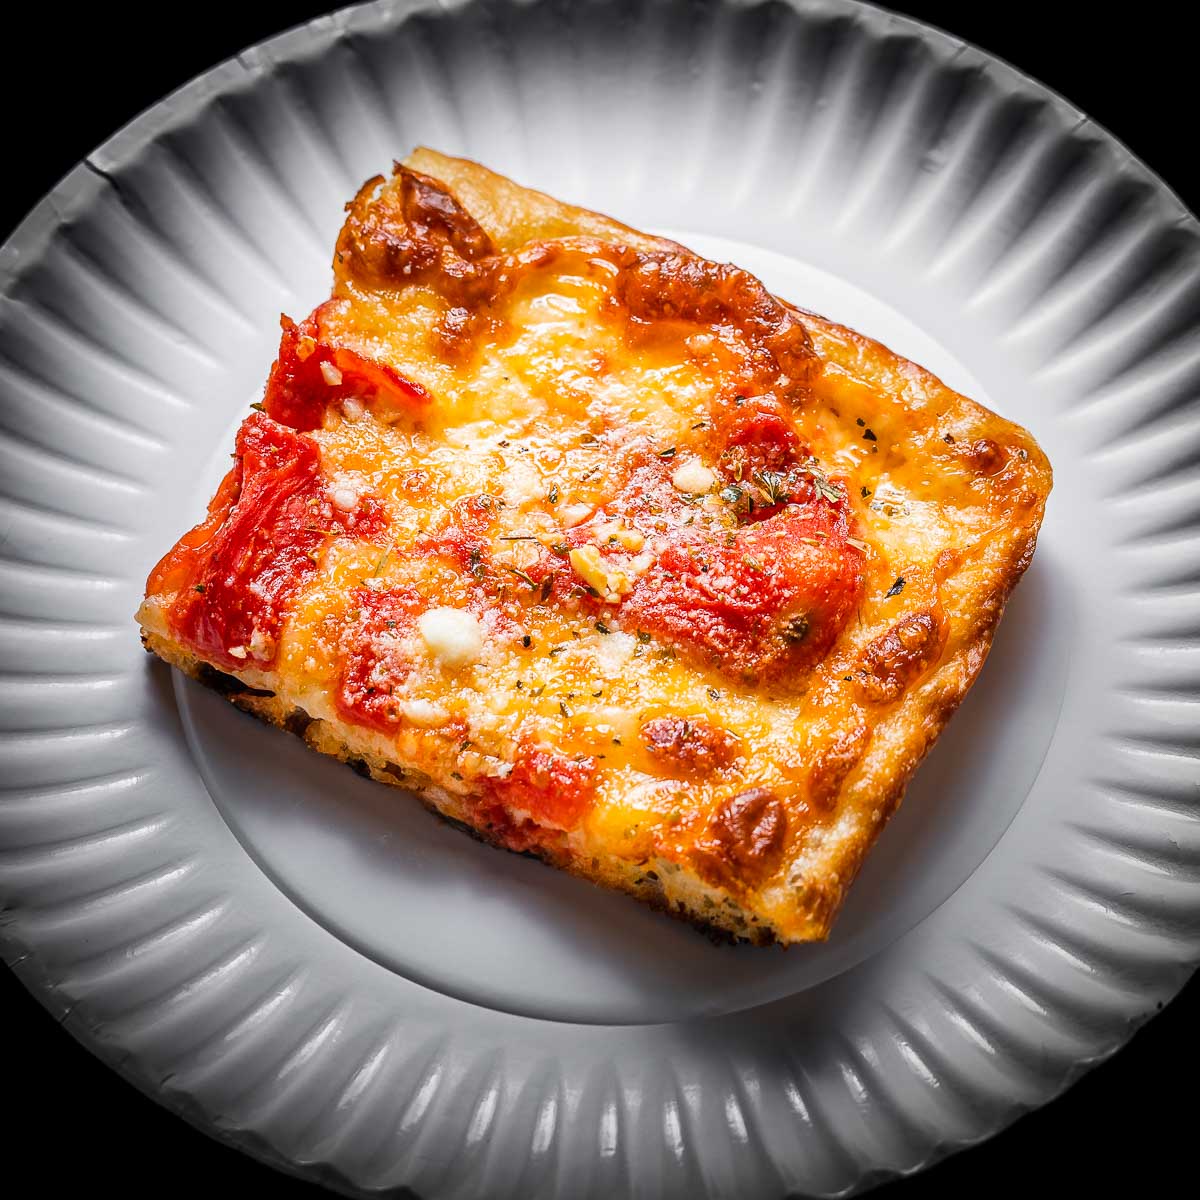 https://www.sipandfeast.com/wp-content/uploads/2021/06/grandma-pizza-recipe-snippet.jpg